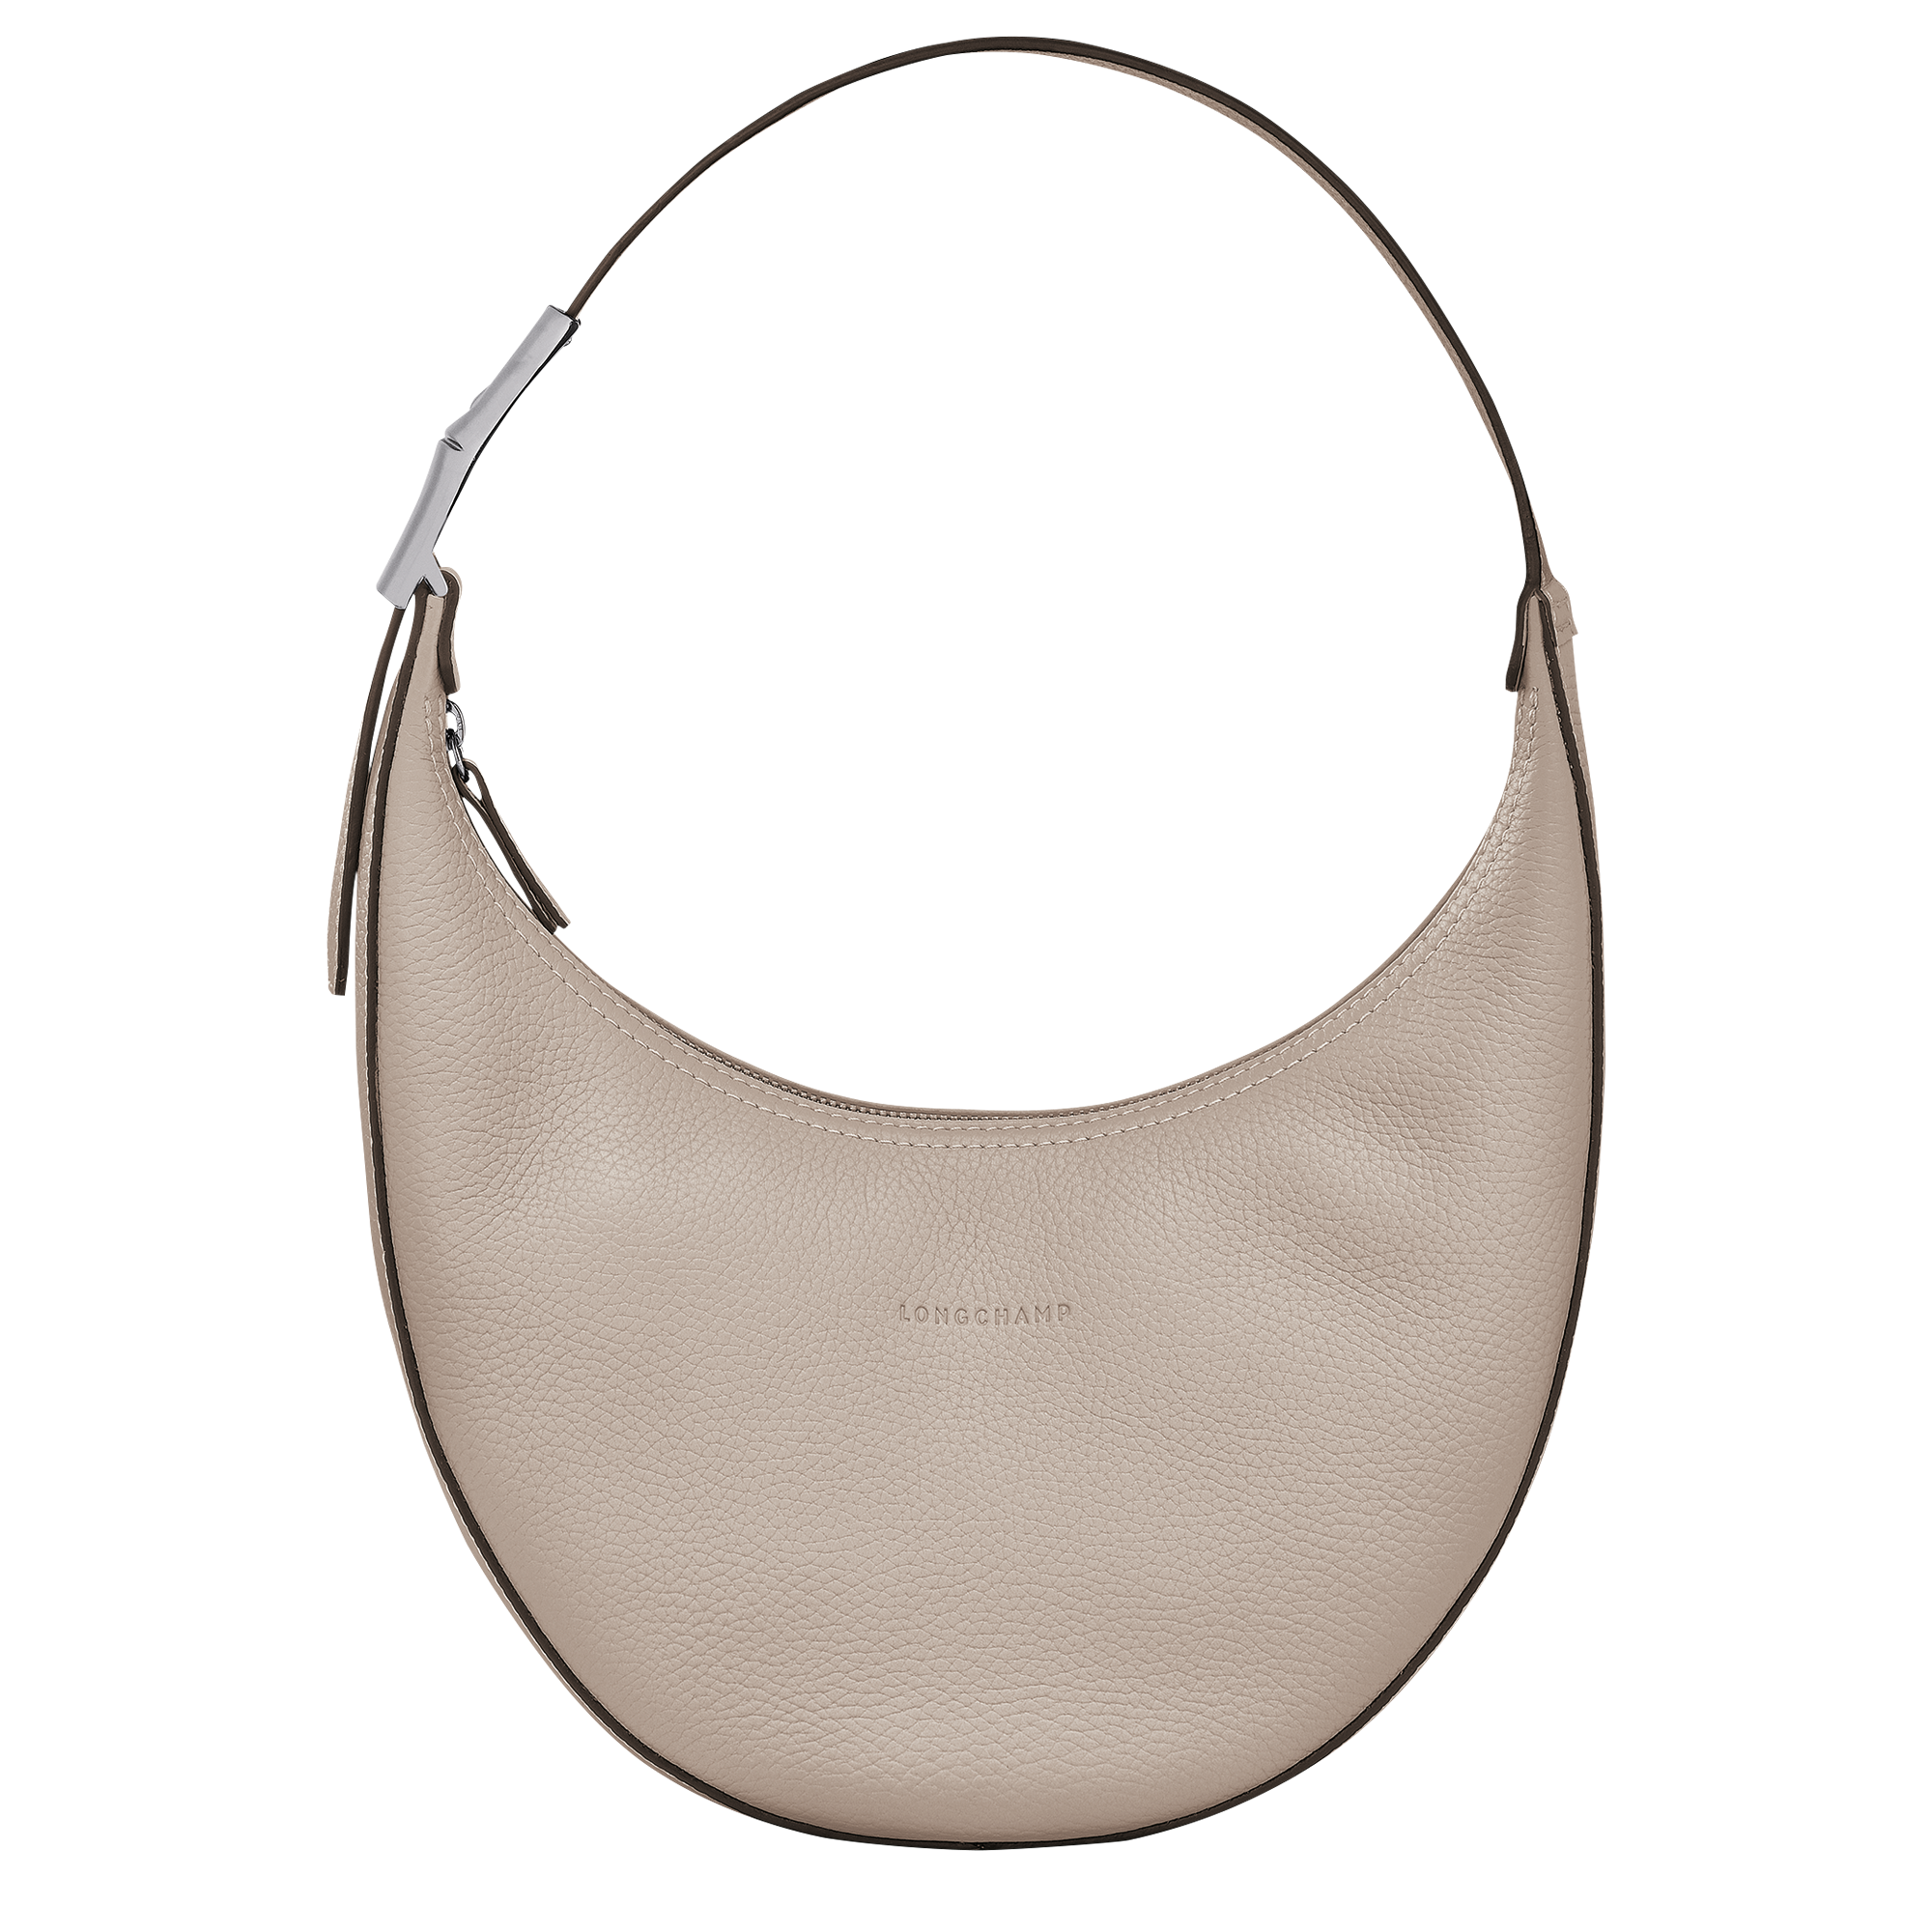 Roseau Essential Hobo Bag by Longchamp